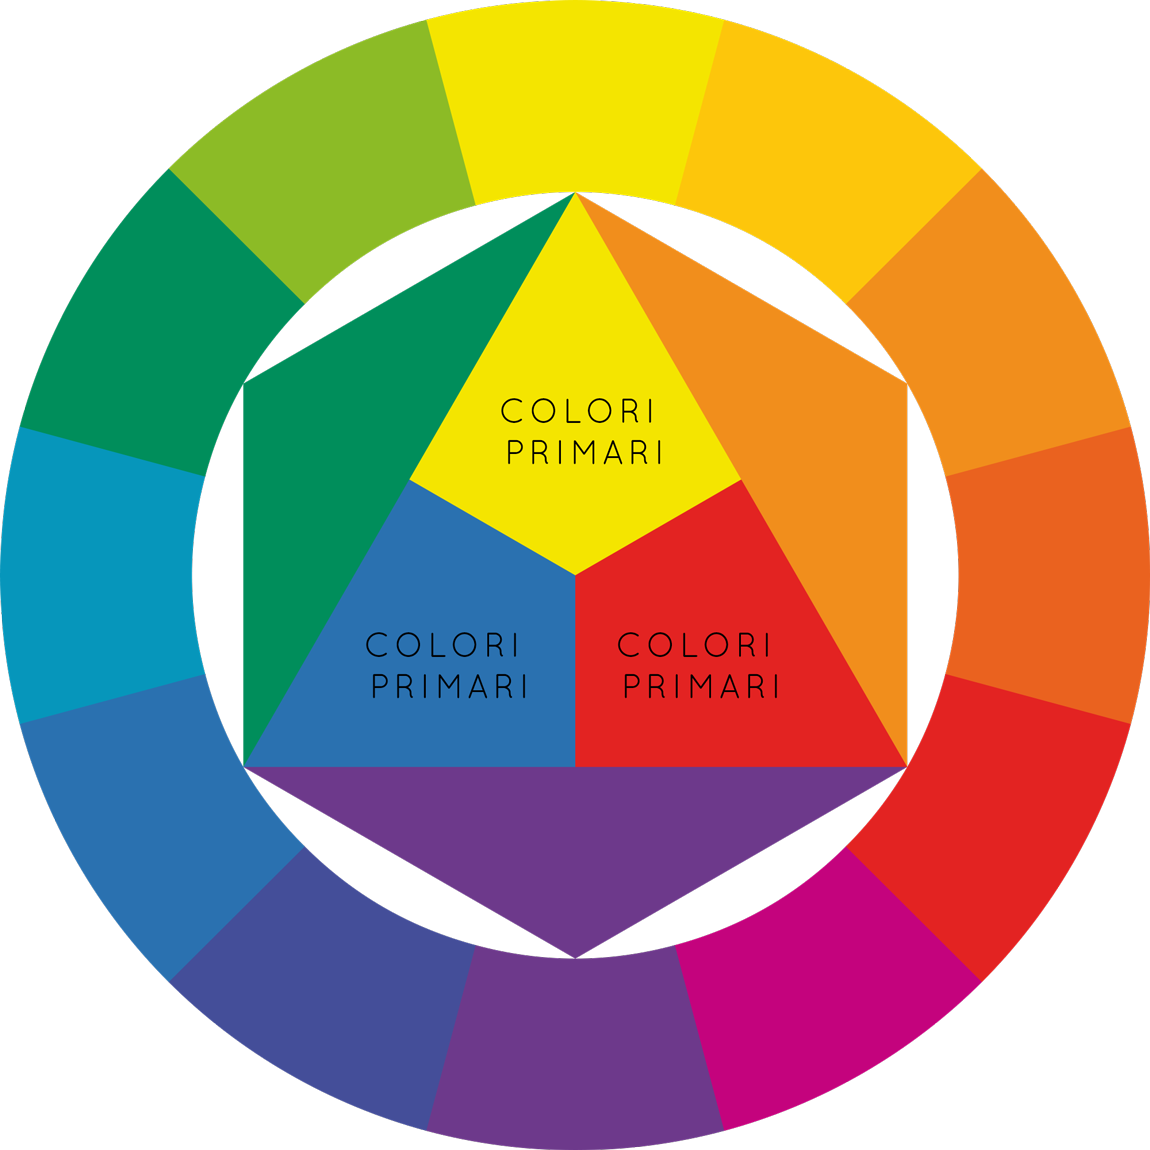 Armocromia:colori primari, secondari e terziari.